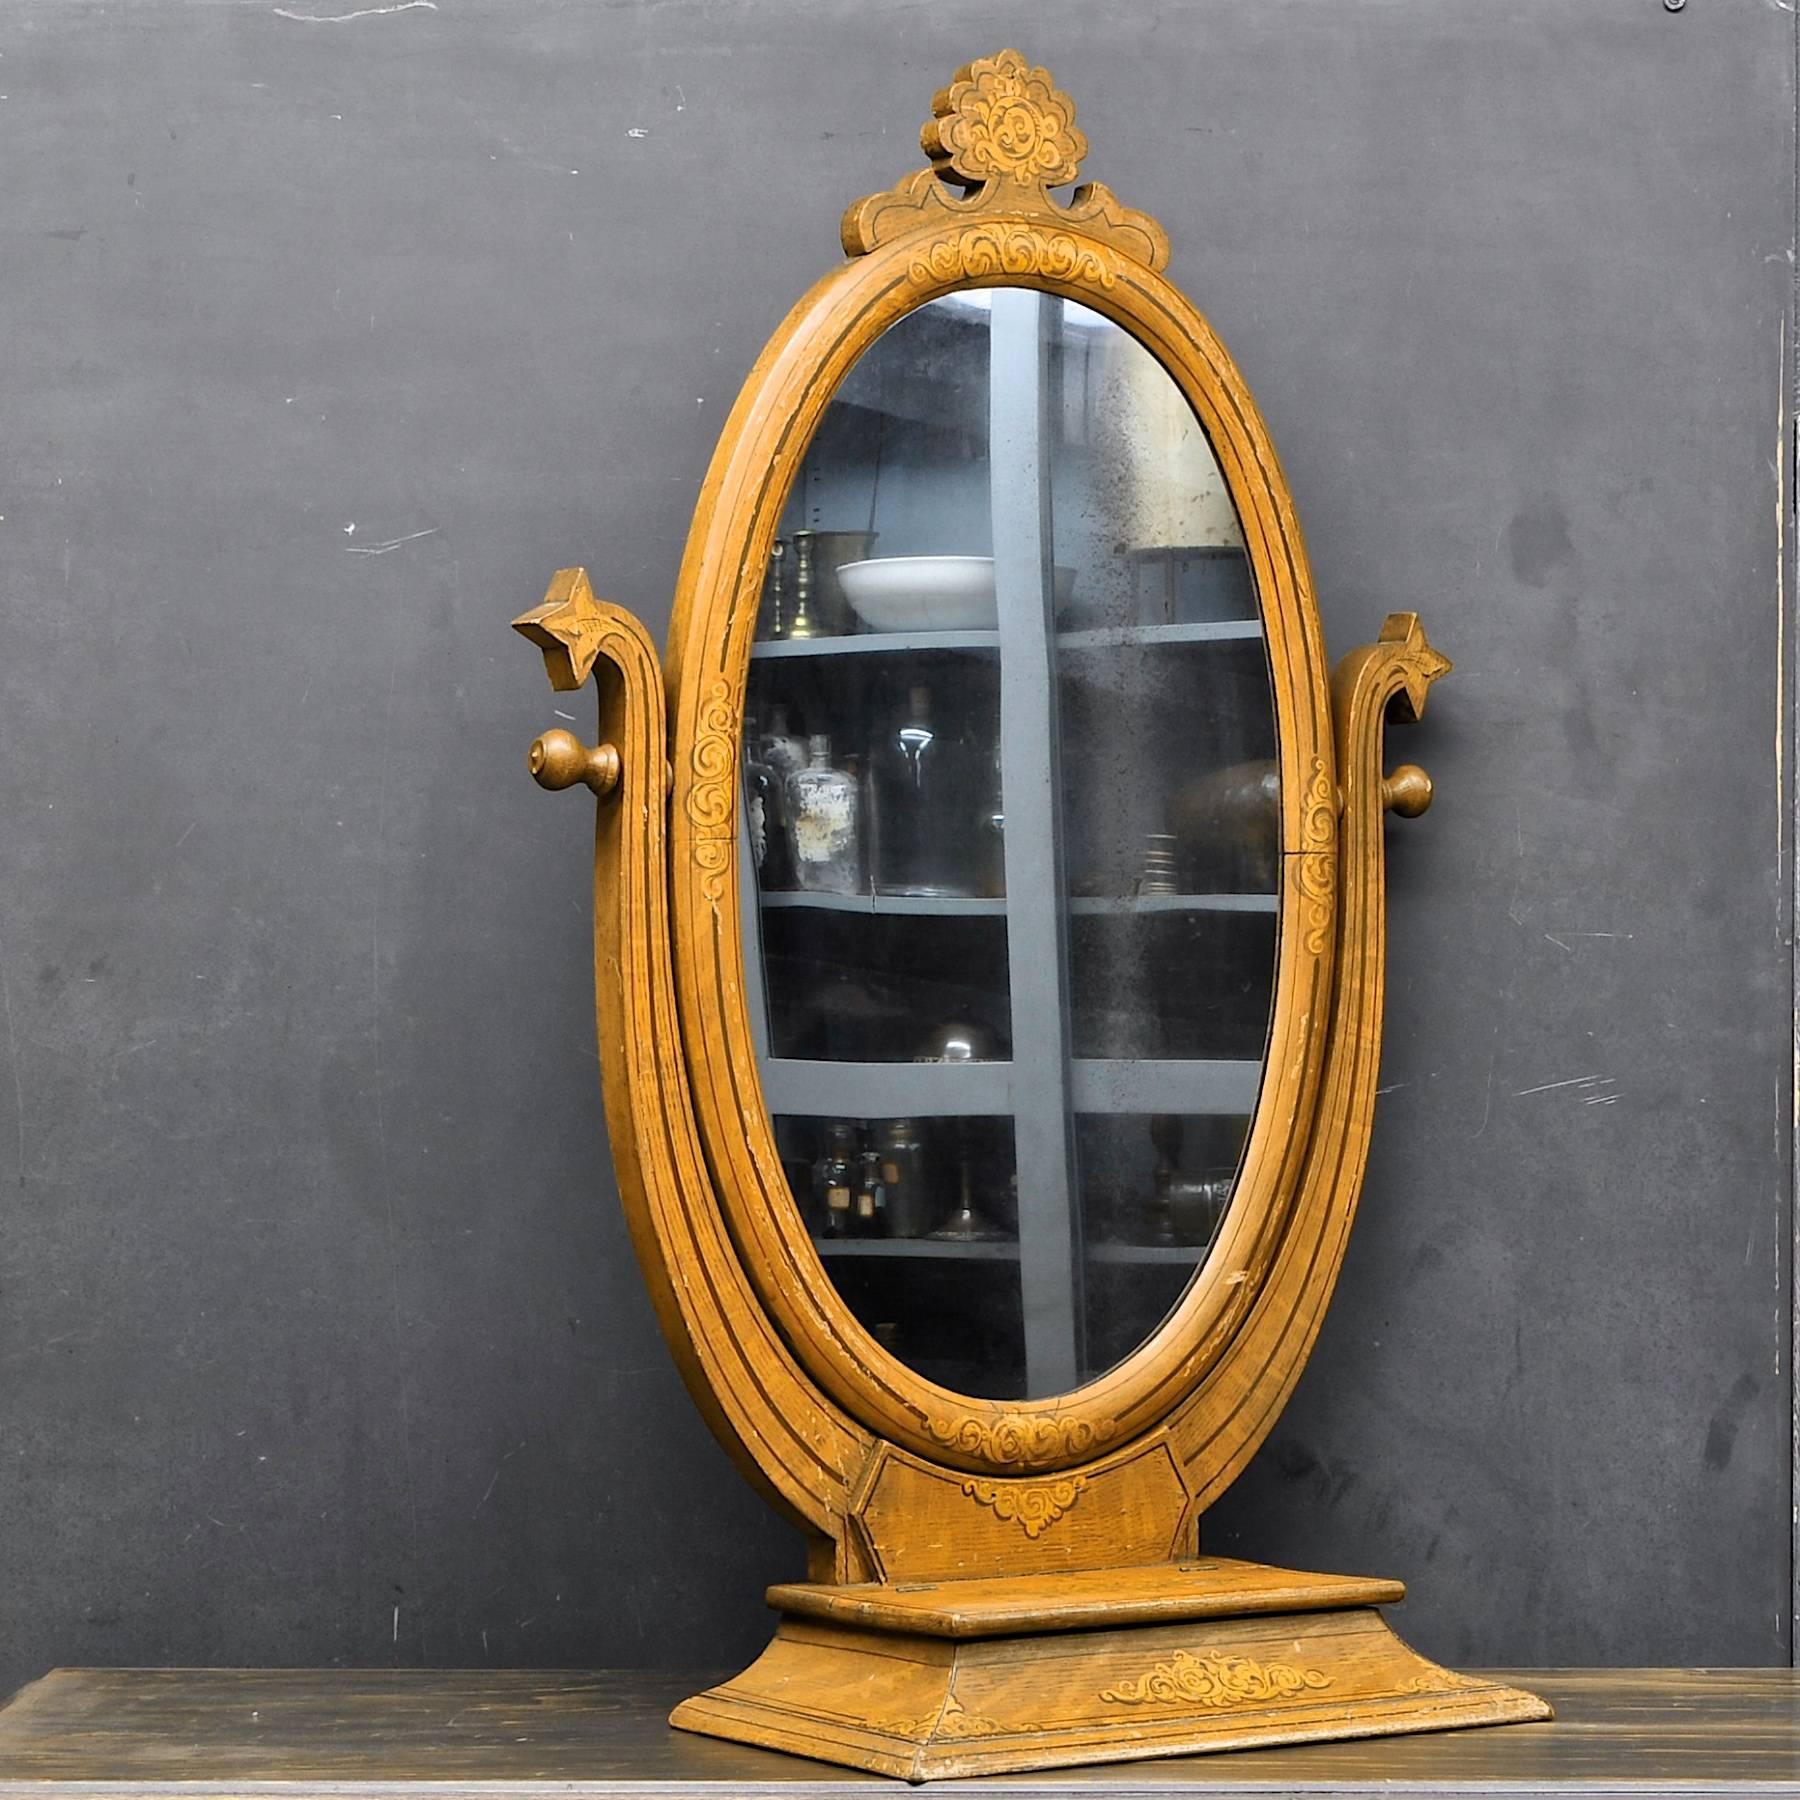 Bohemian Arts & Crafts tabletop mirror in wonderful original condition.